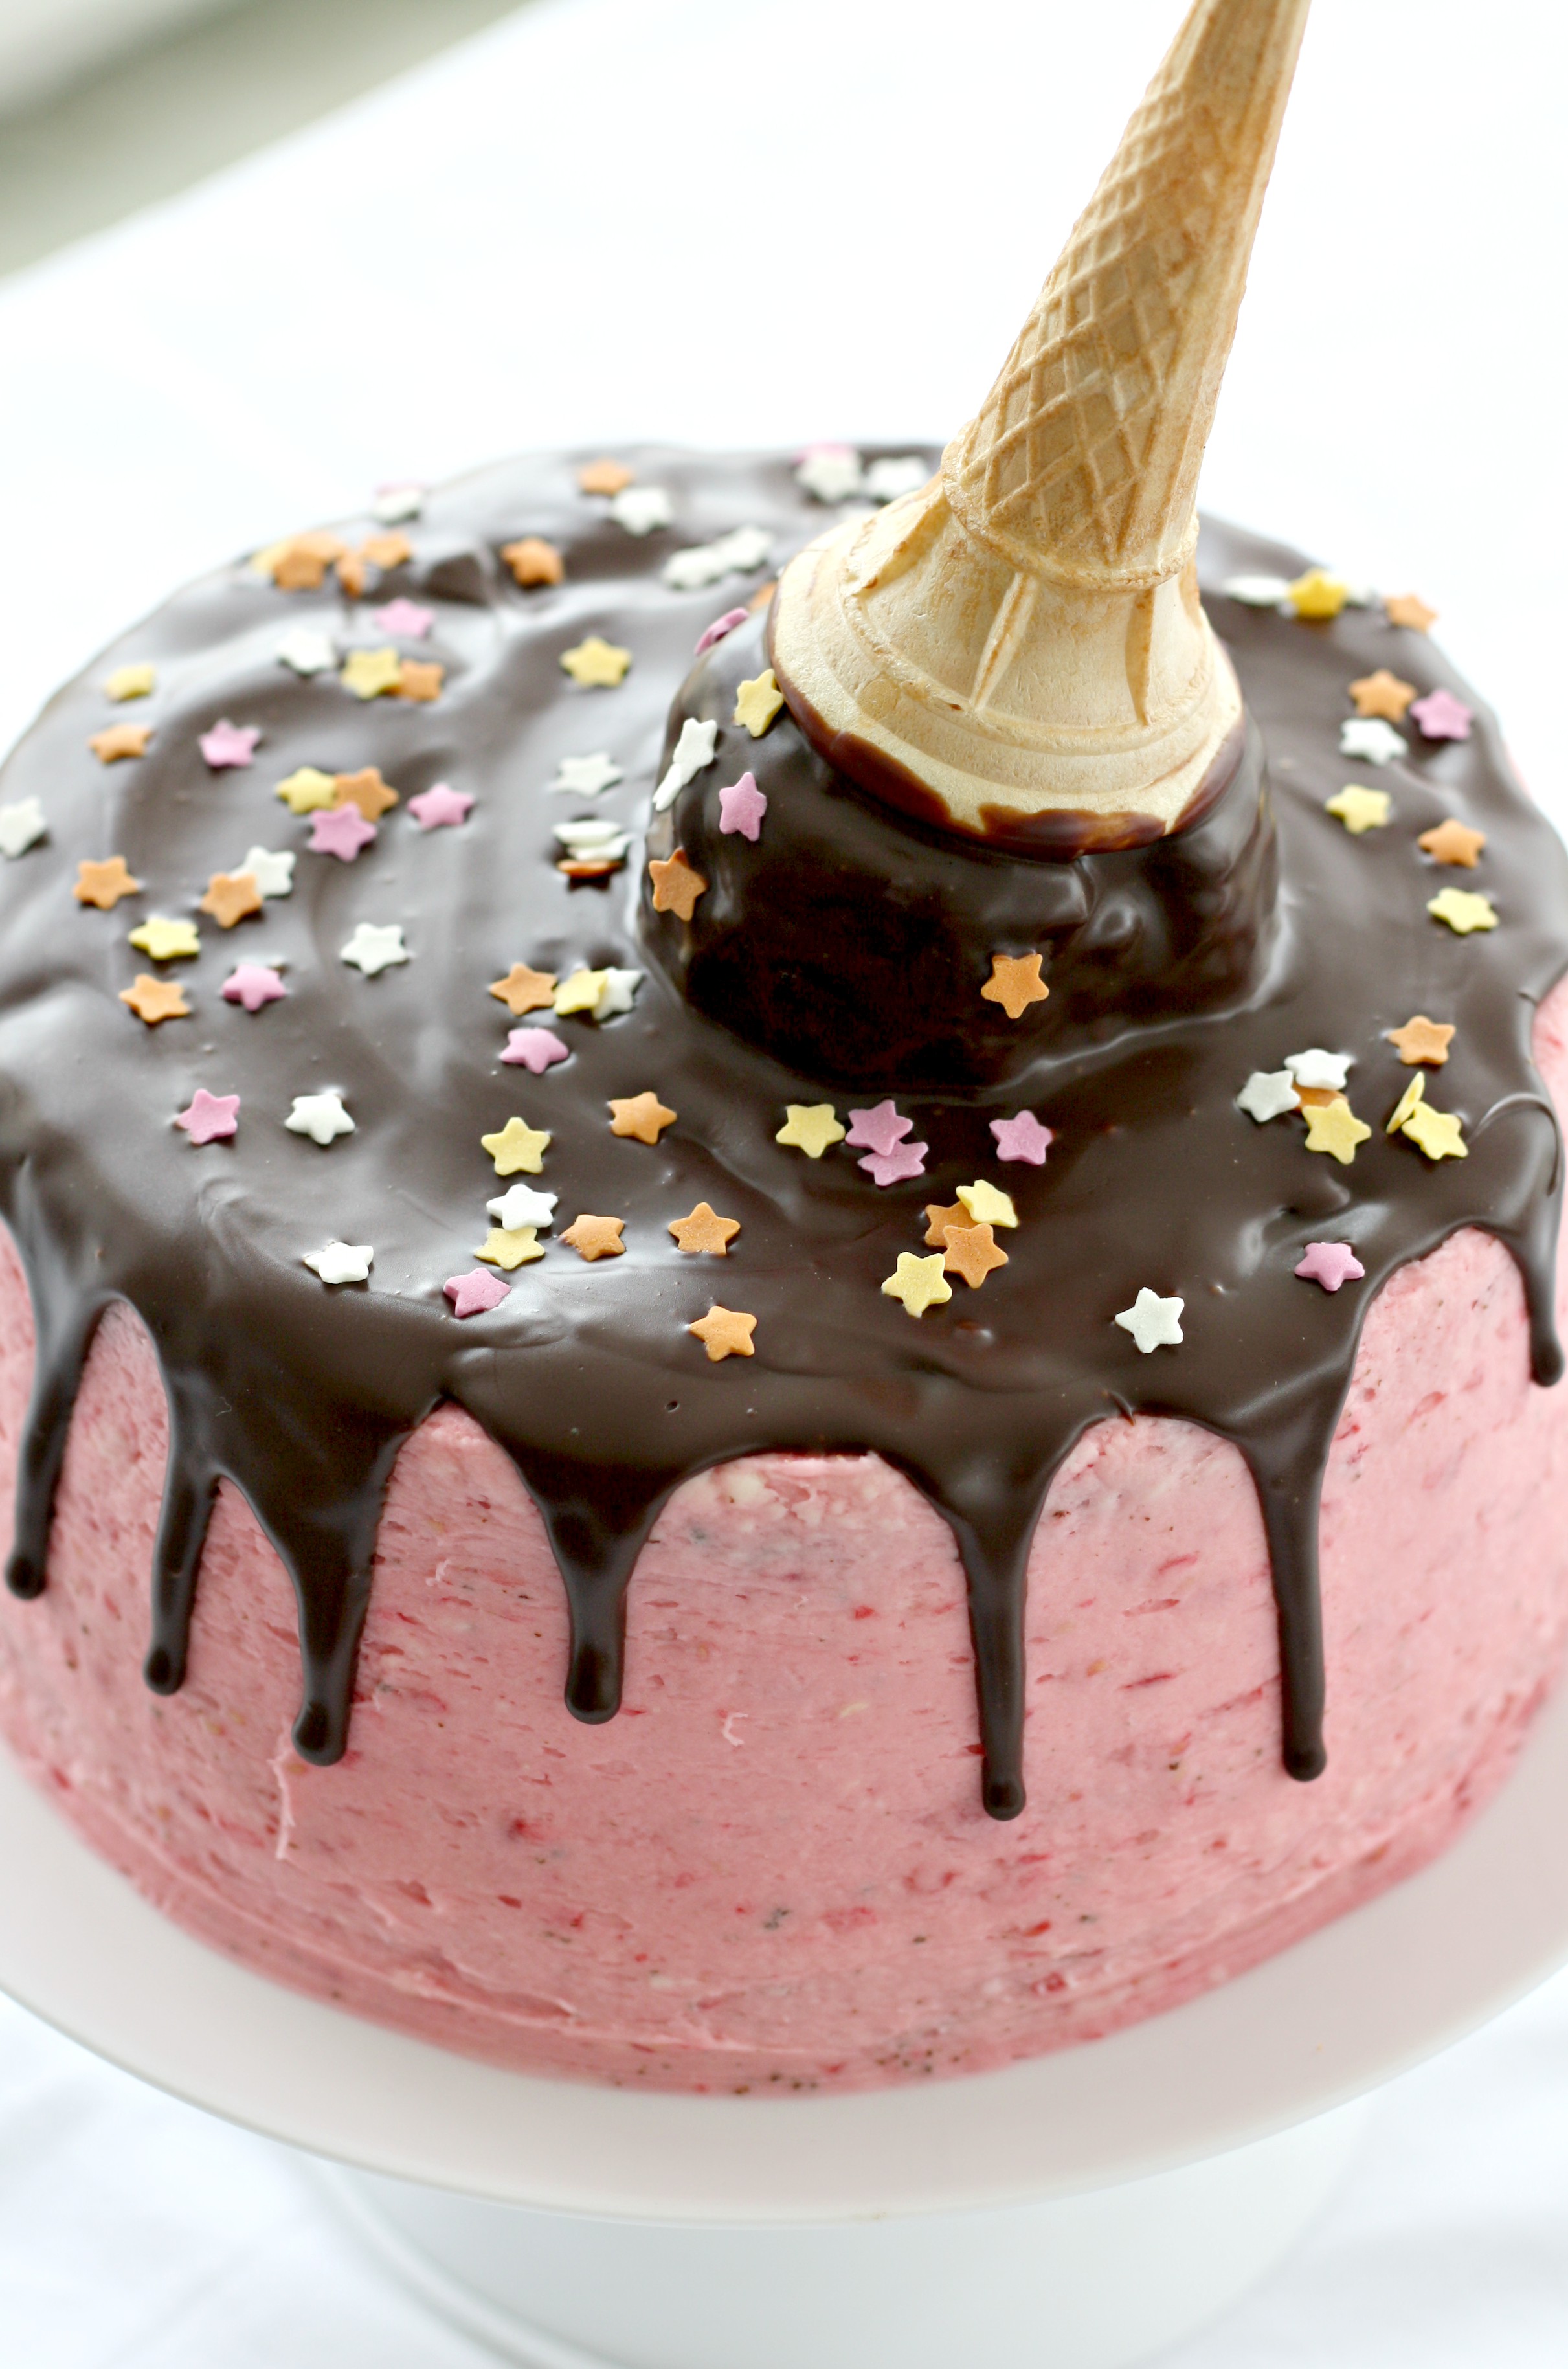 Raspberry and Chocolate Melting Ice Cream Cake - Makes, Bakes and Decor